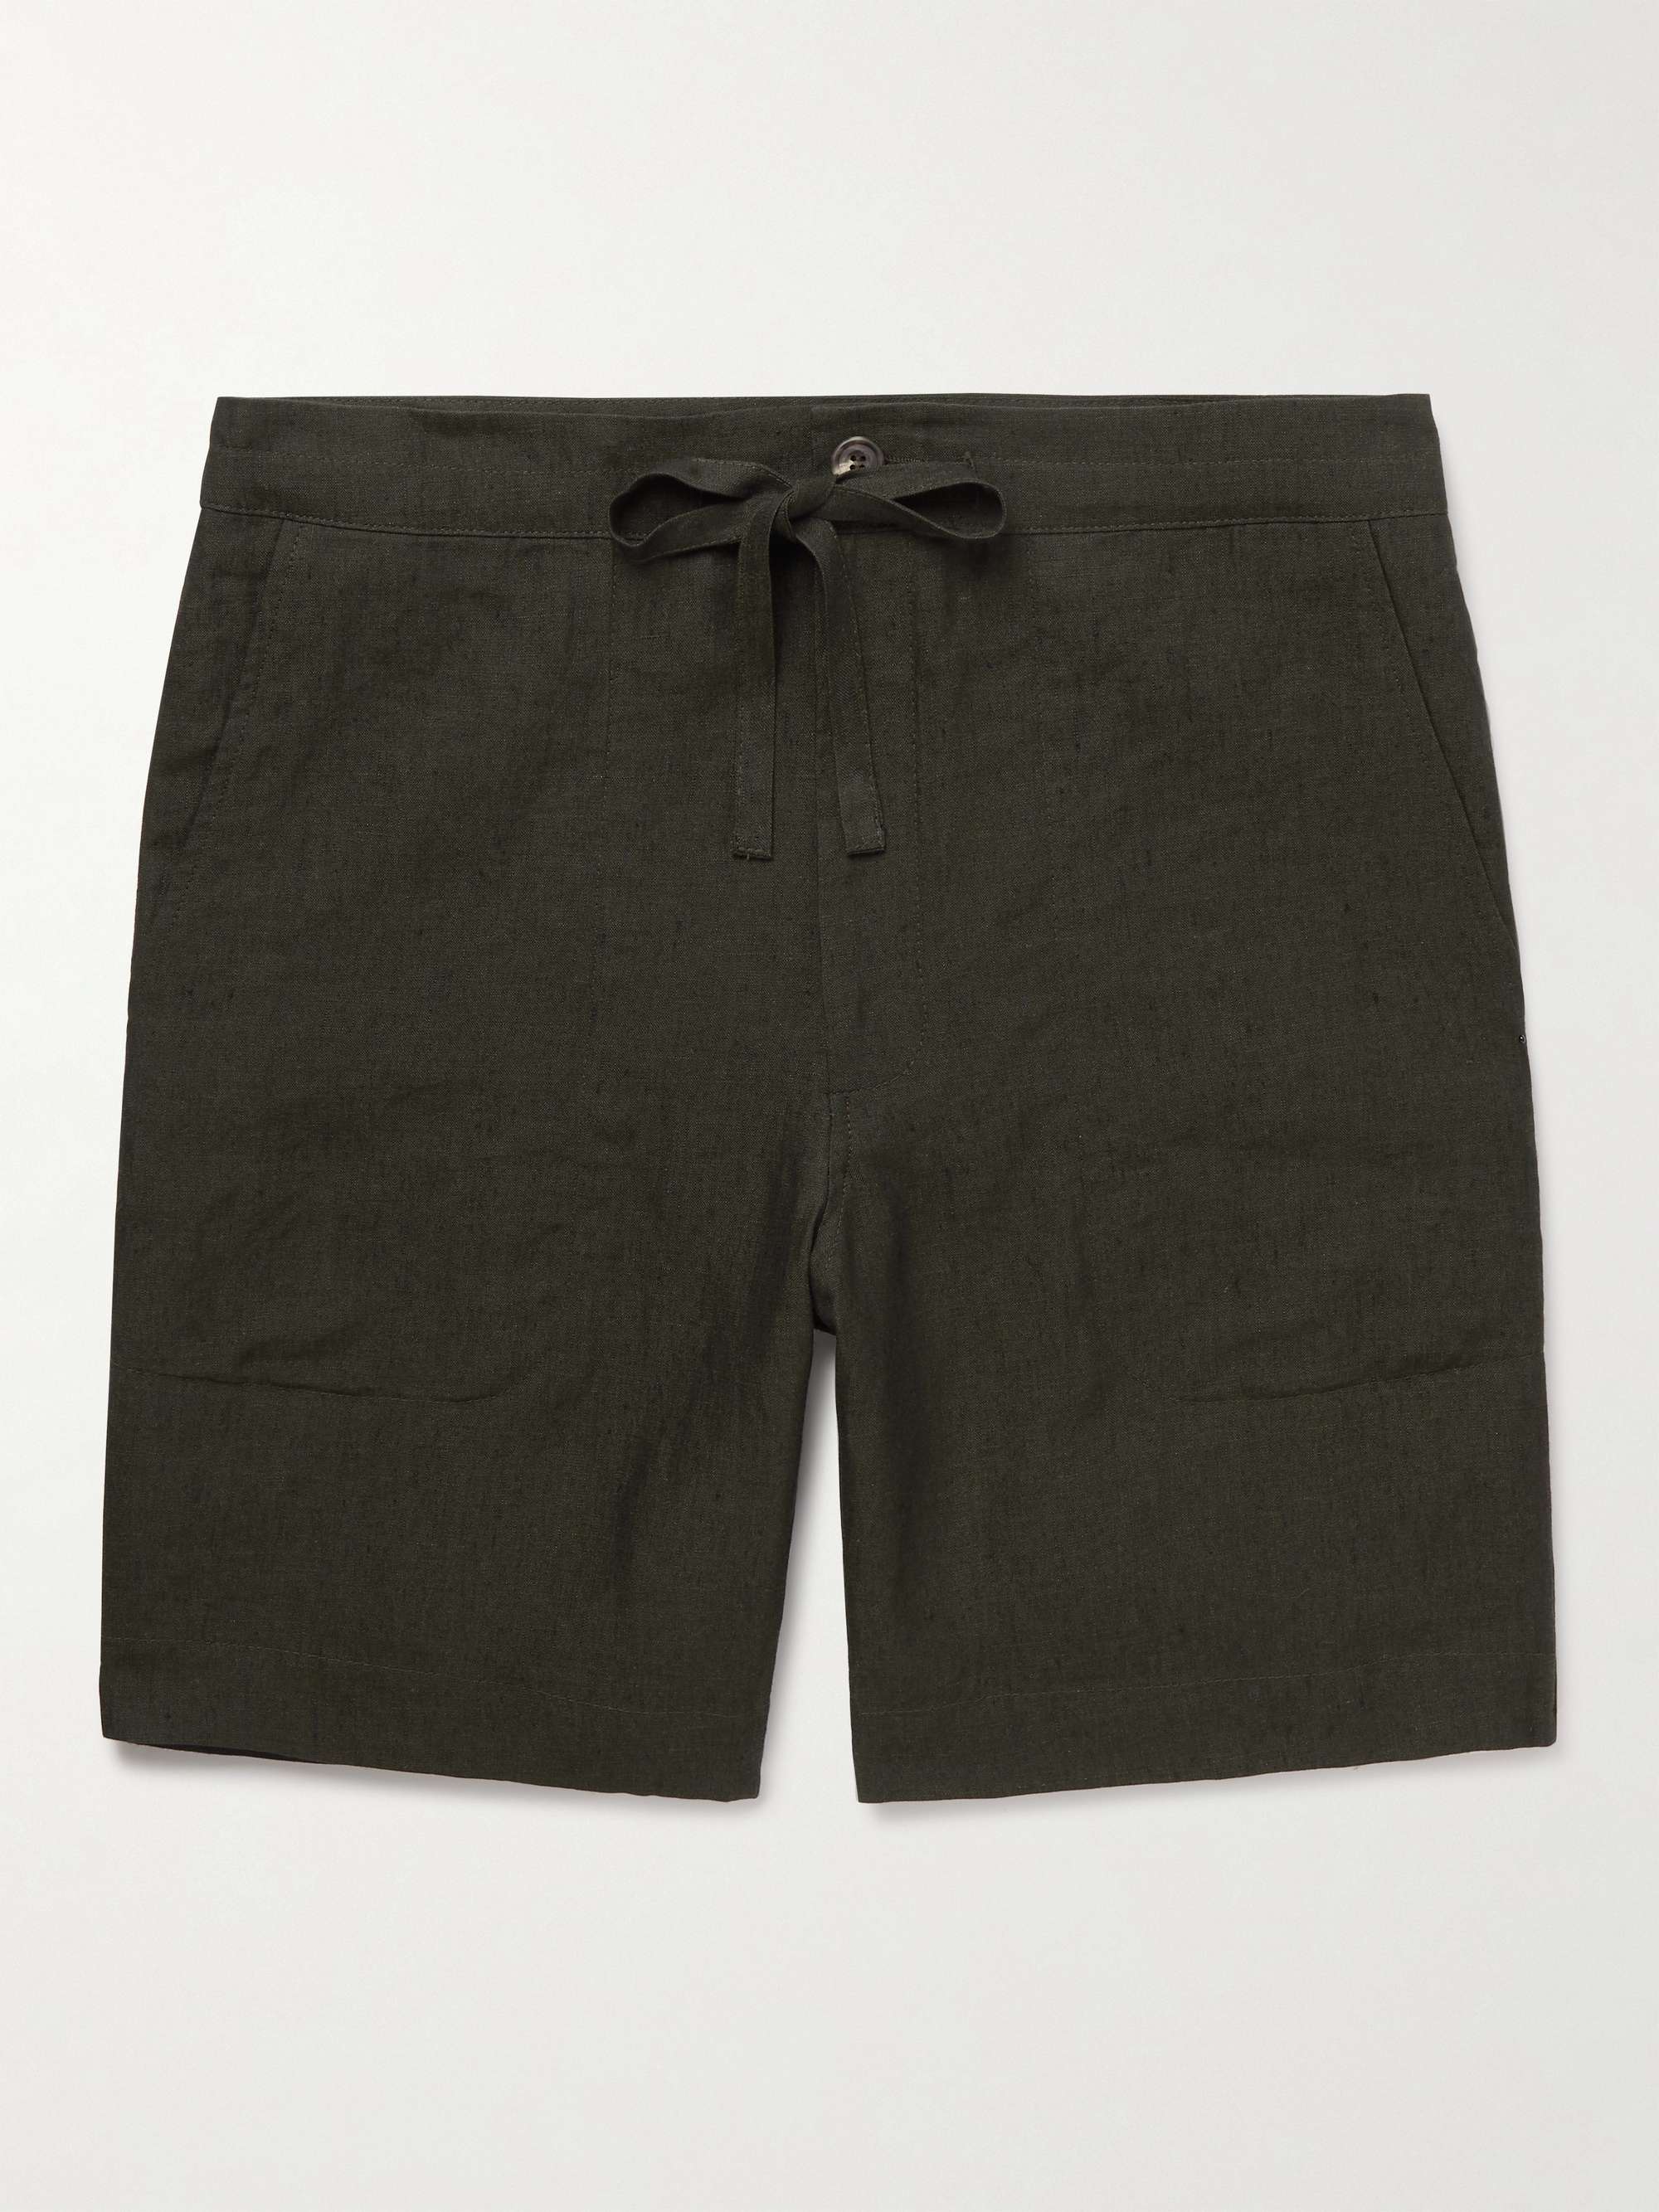 RICHARD JAMES Slim-Fit Linen Drawstring Shorts